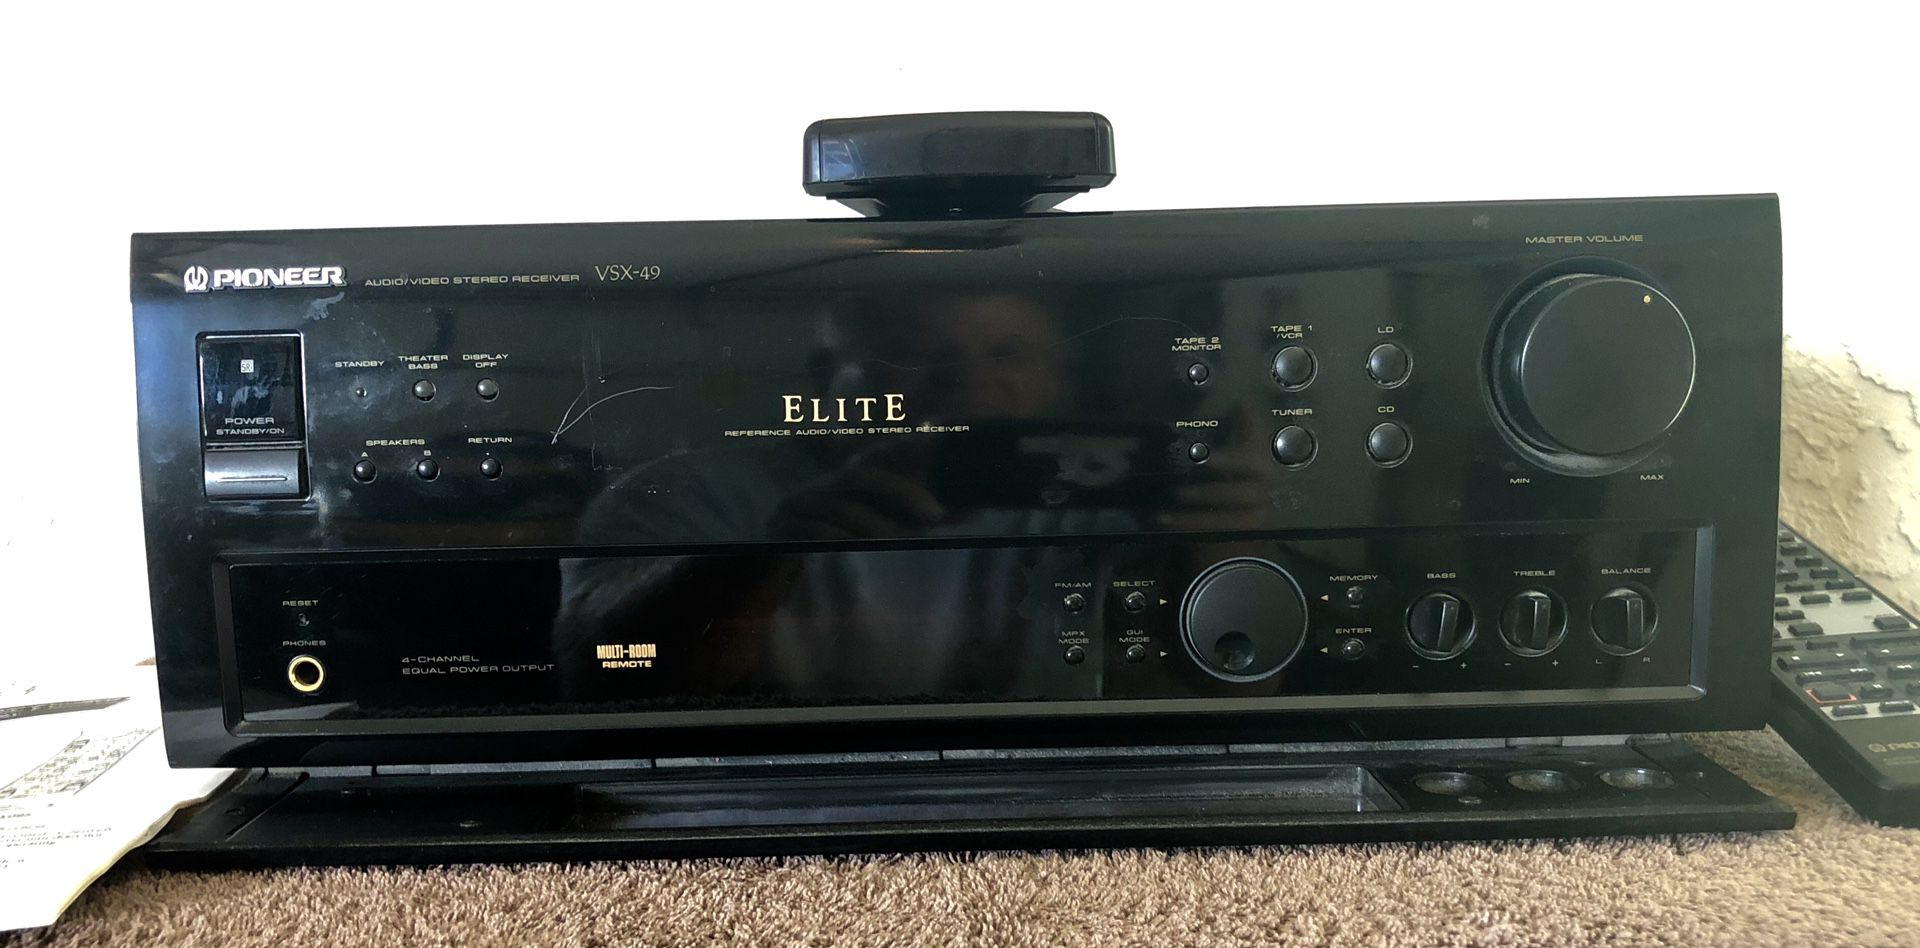 Pioneer VSX-49 Audio/Video Stereo Receiver